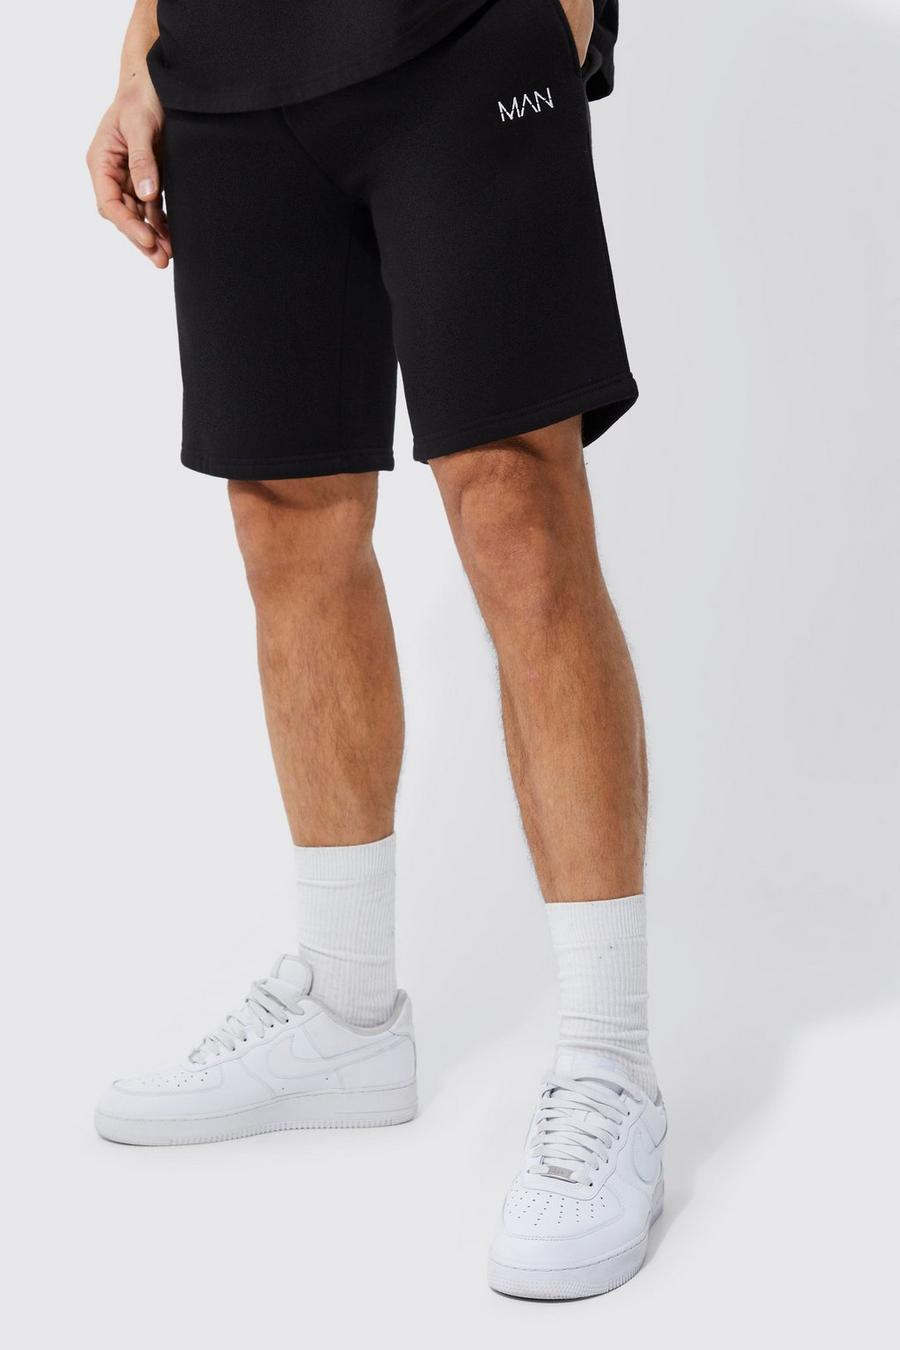 Tall lockere Man Jersey-Shorts, Black